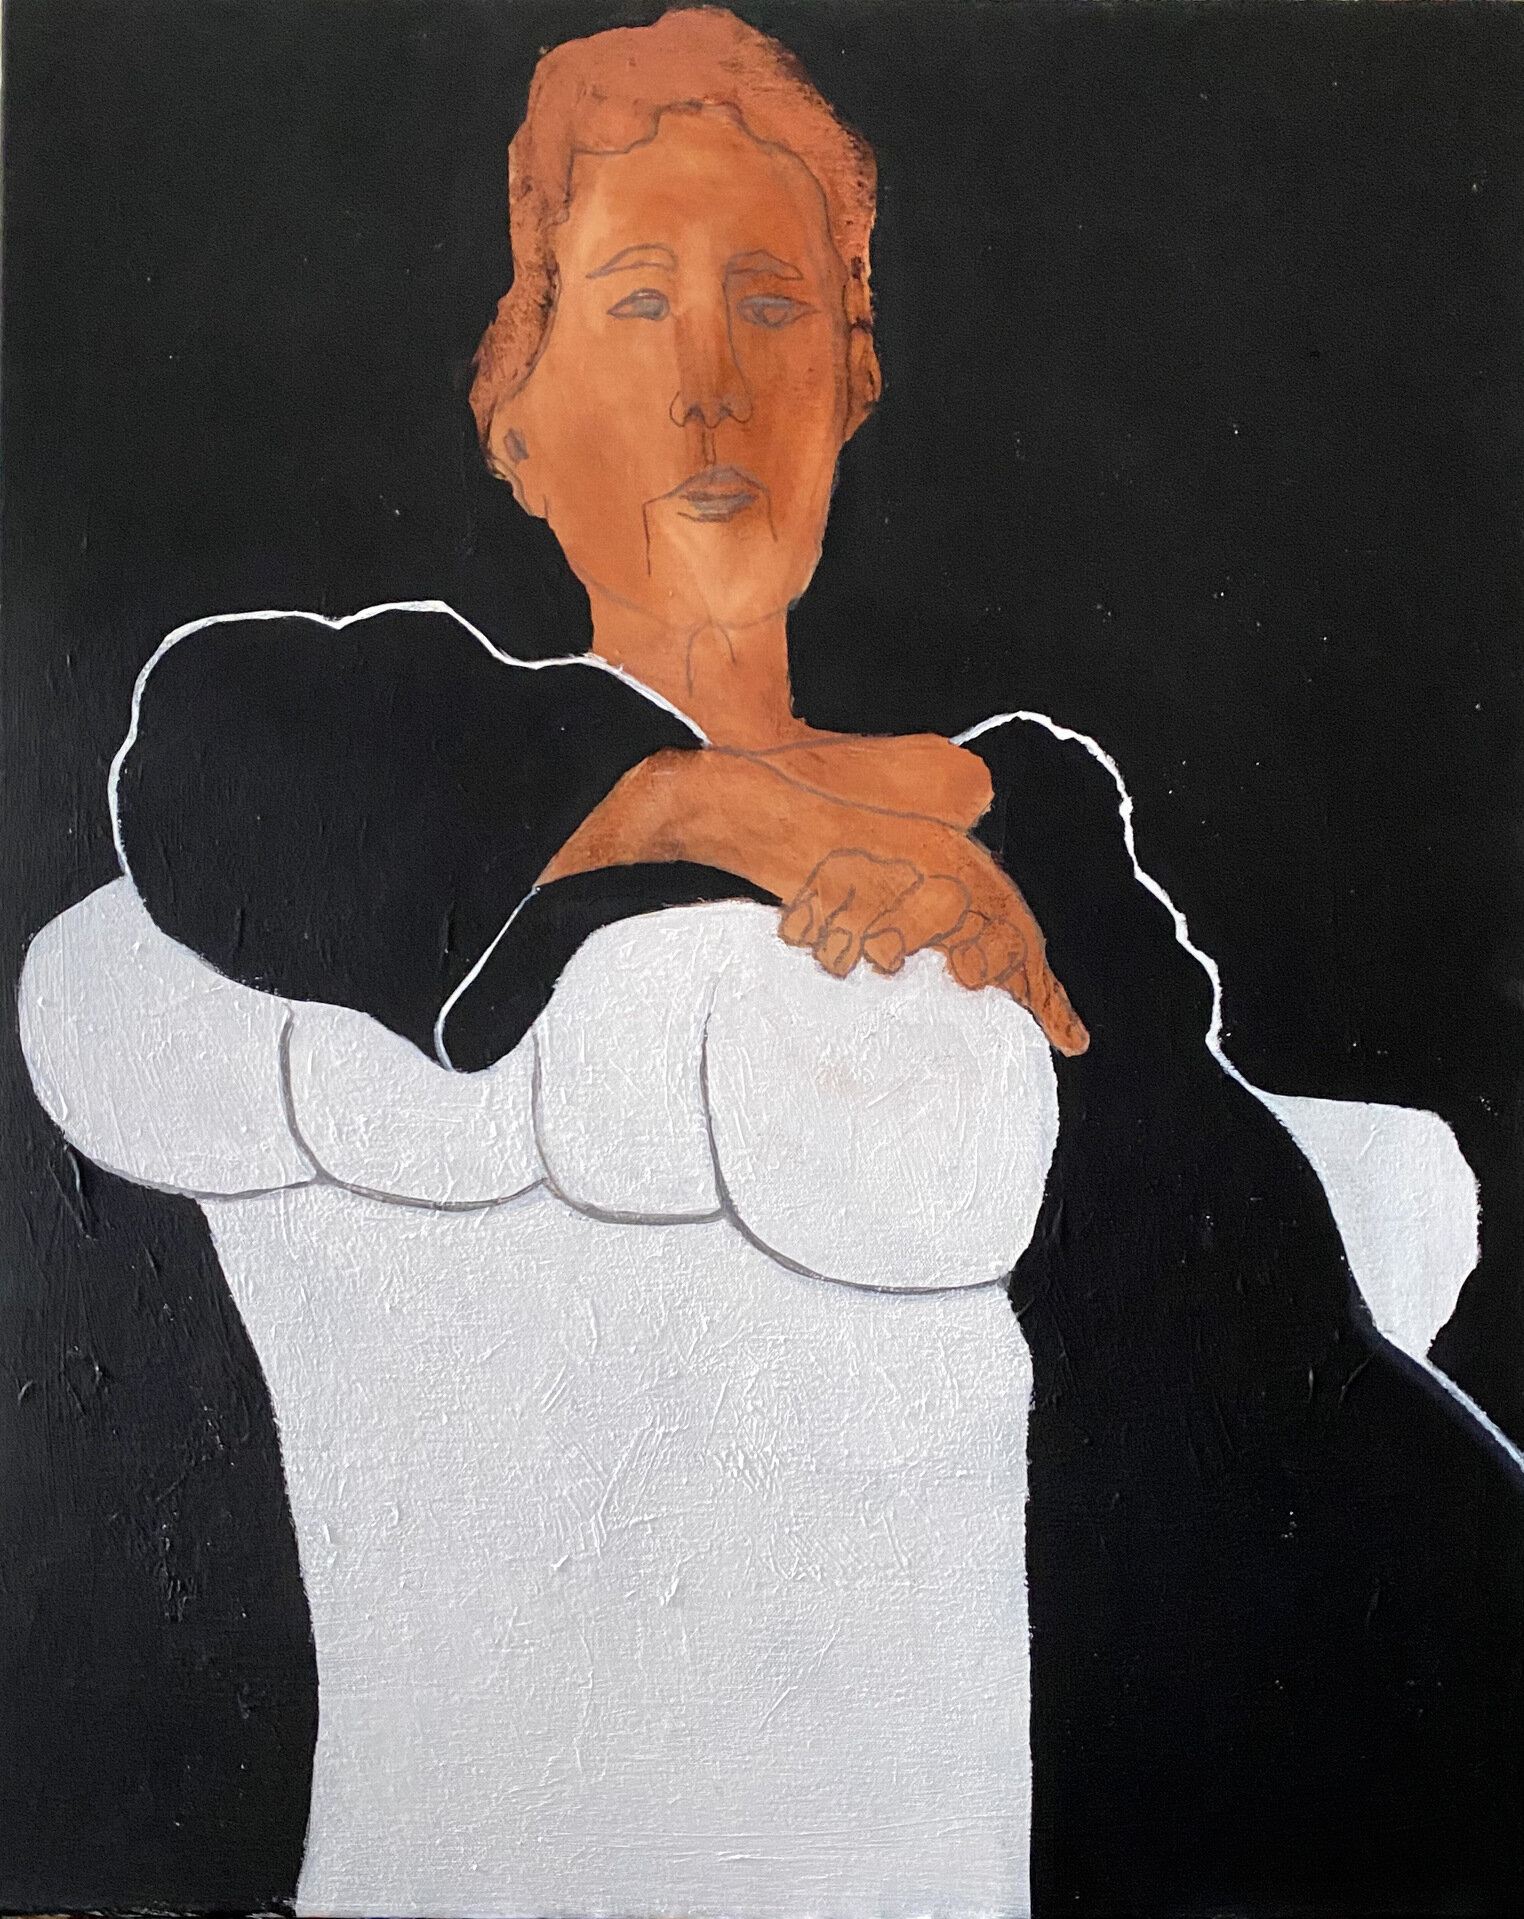   Barbara Dirnbach  “Portrait Study in Black and White” 30" x 24" x 1"; Acrylic on canvas/framed $700. 